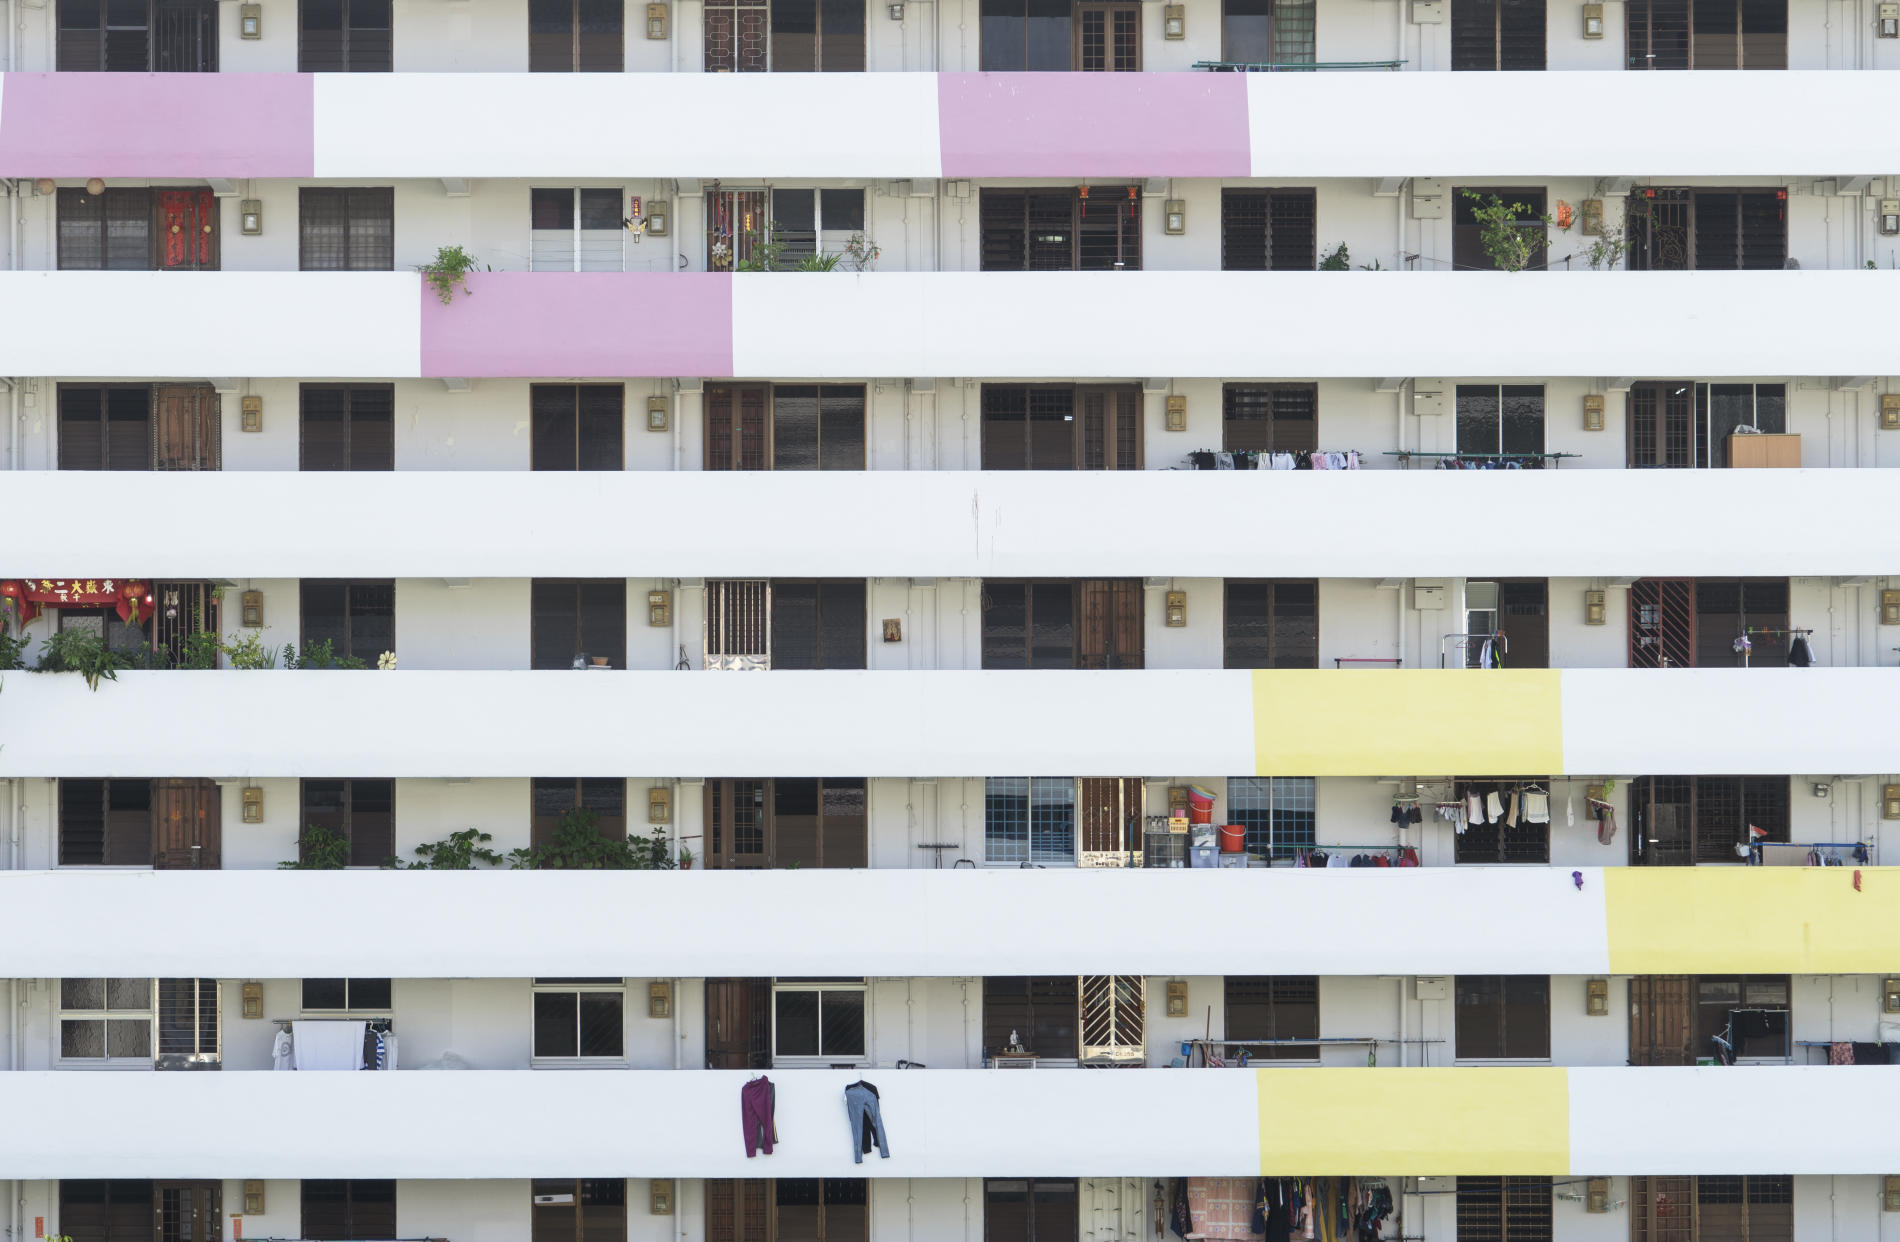 Units in a public Housing Development Board (HDB) block of flats in MacPherson estate, Singapore with windows closed